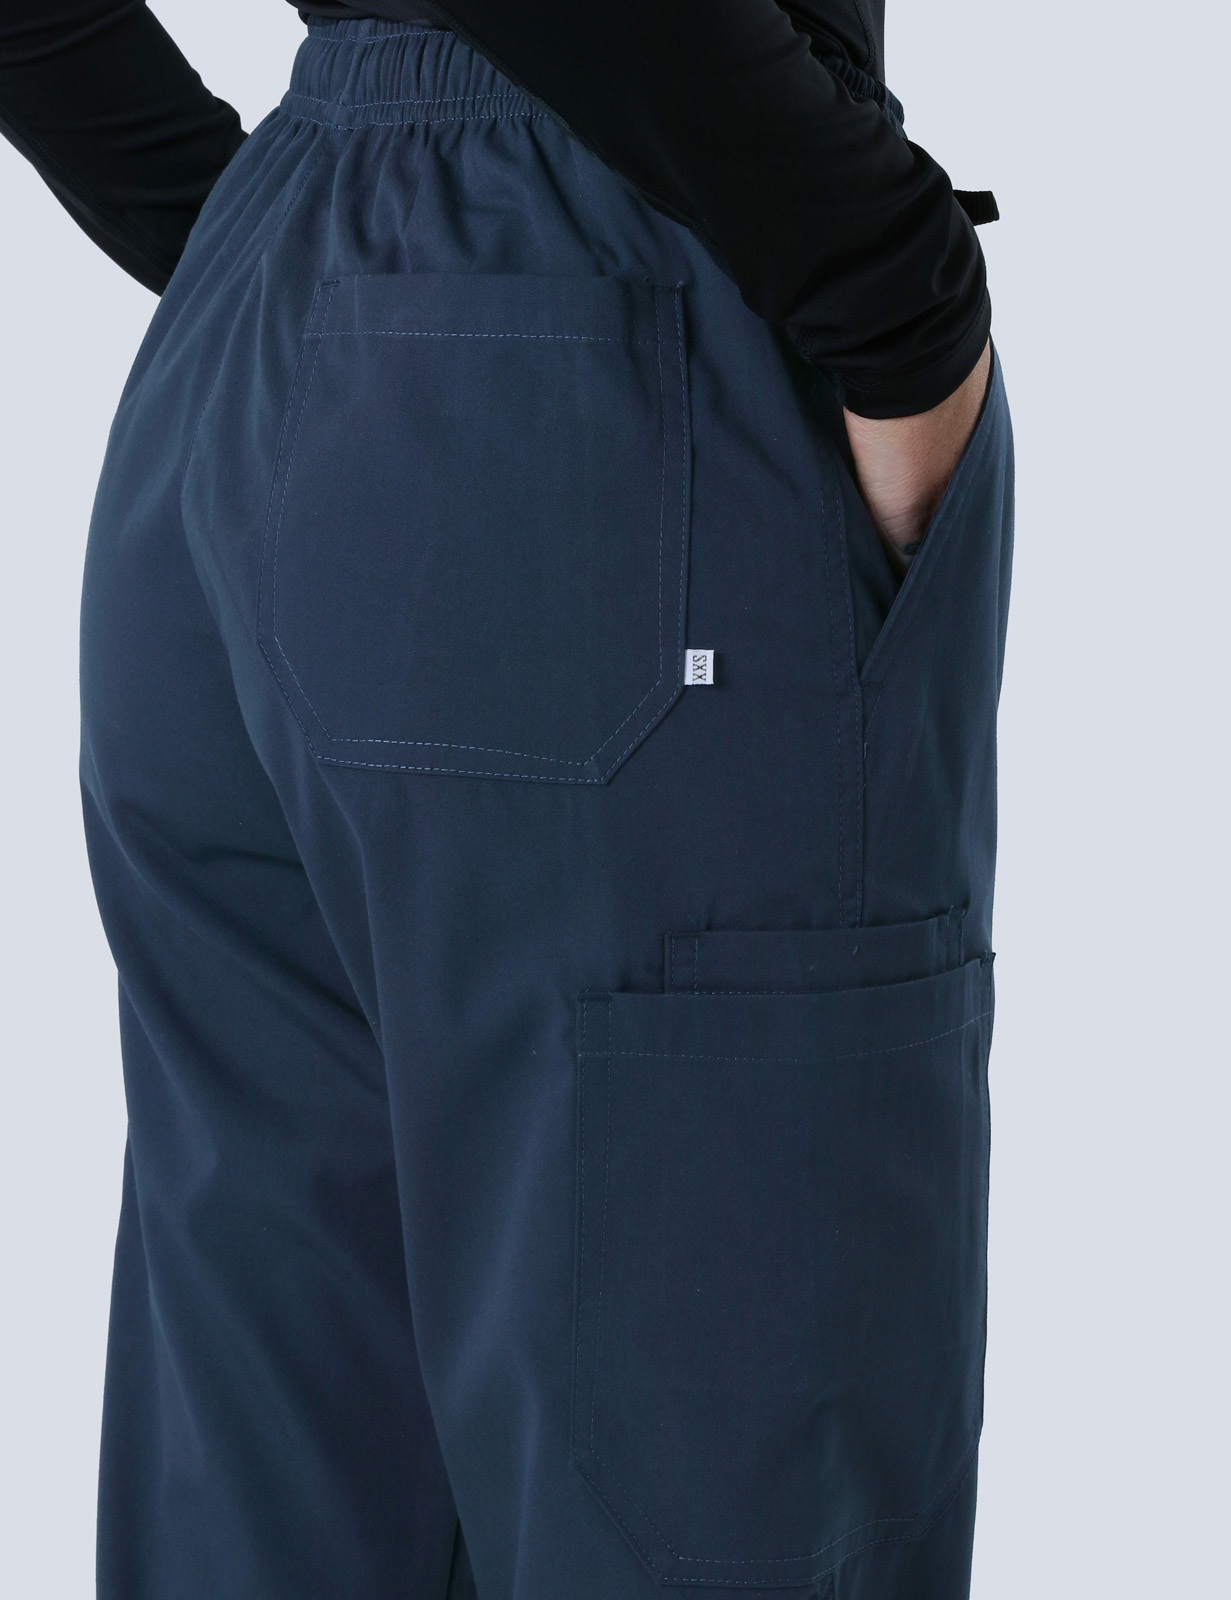 Women's Cargo Performance Pants - Navy - 2X Large - 2